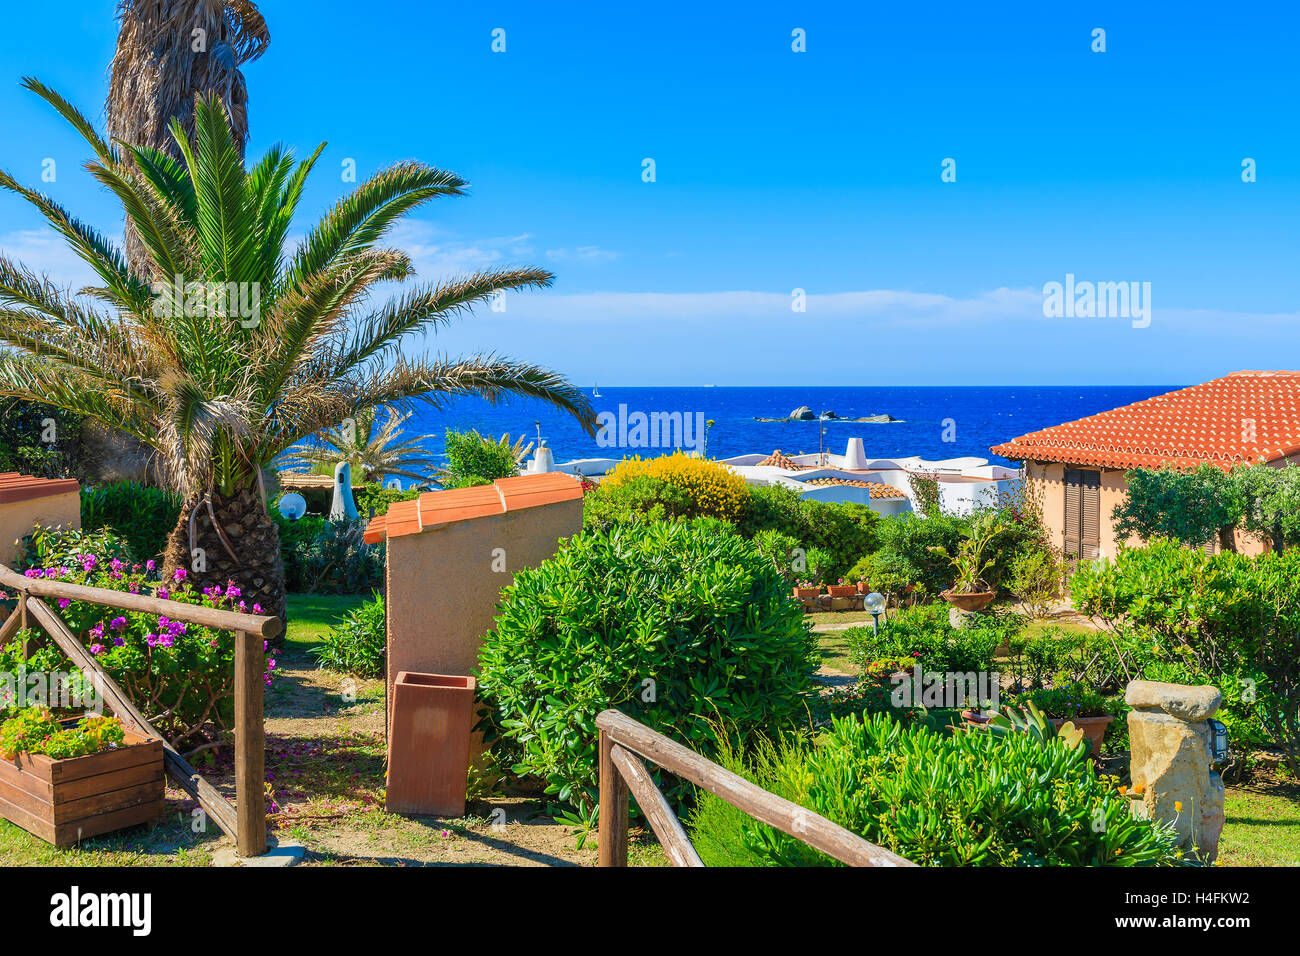 Tropical garden and holiday house on coast of Sardinia island near Cala Caterina beach, Italy Stock Photo